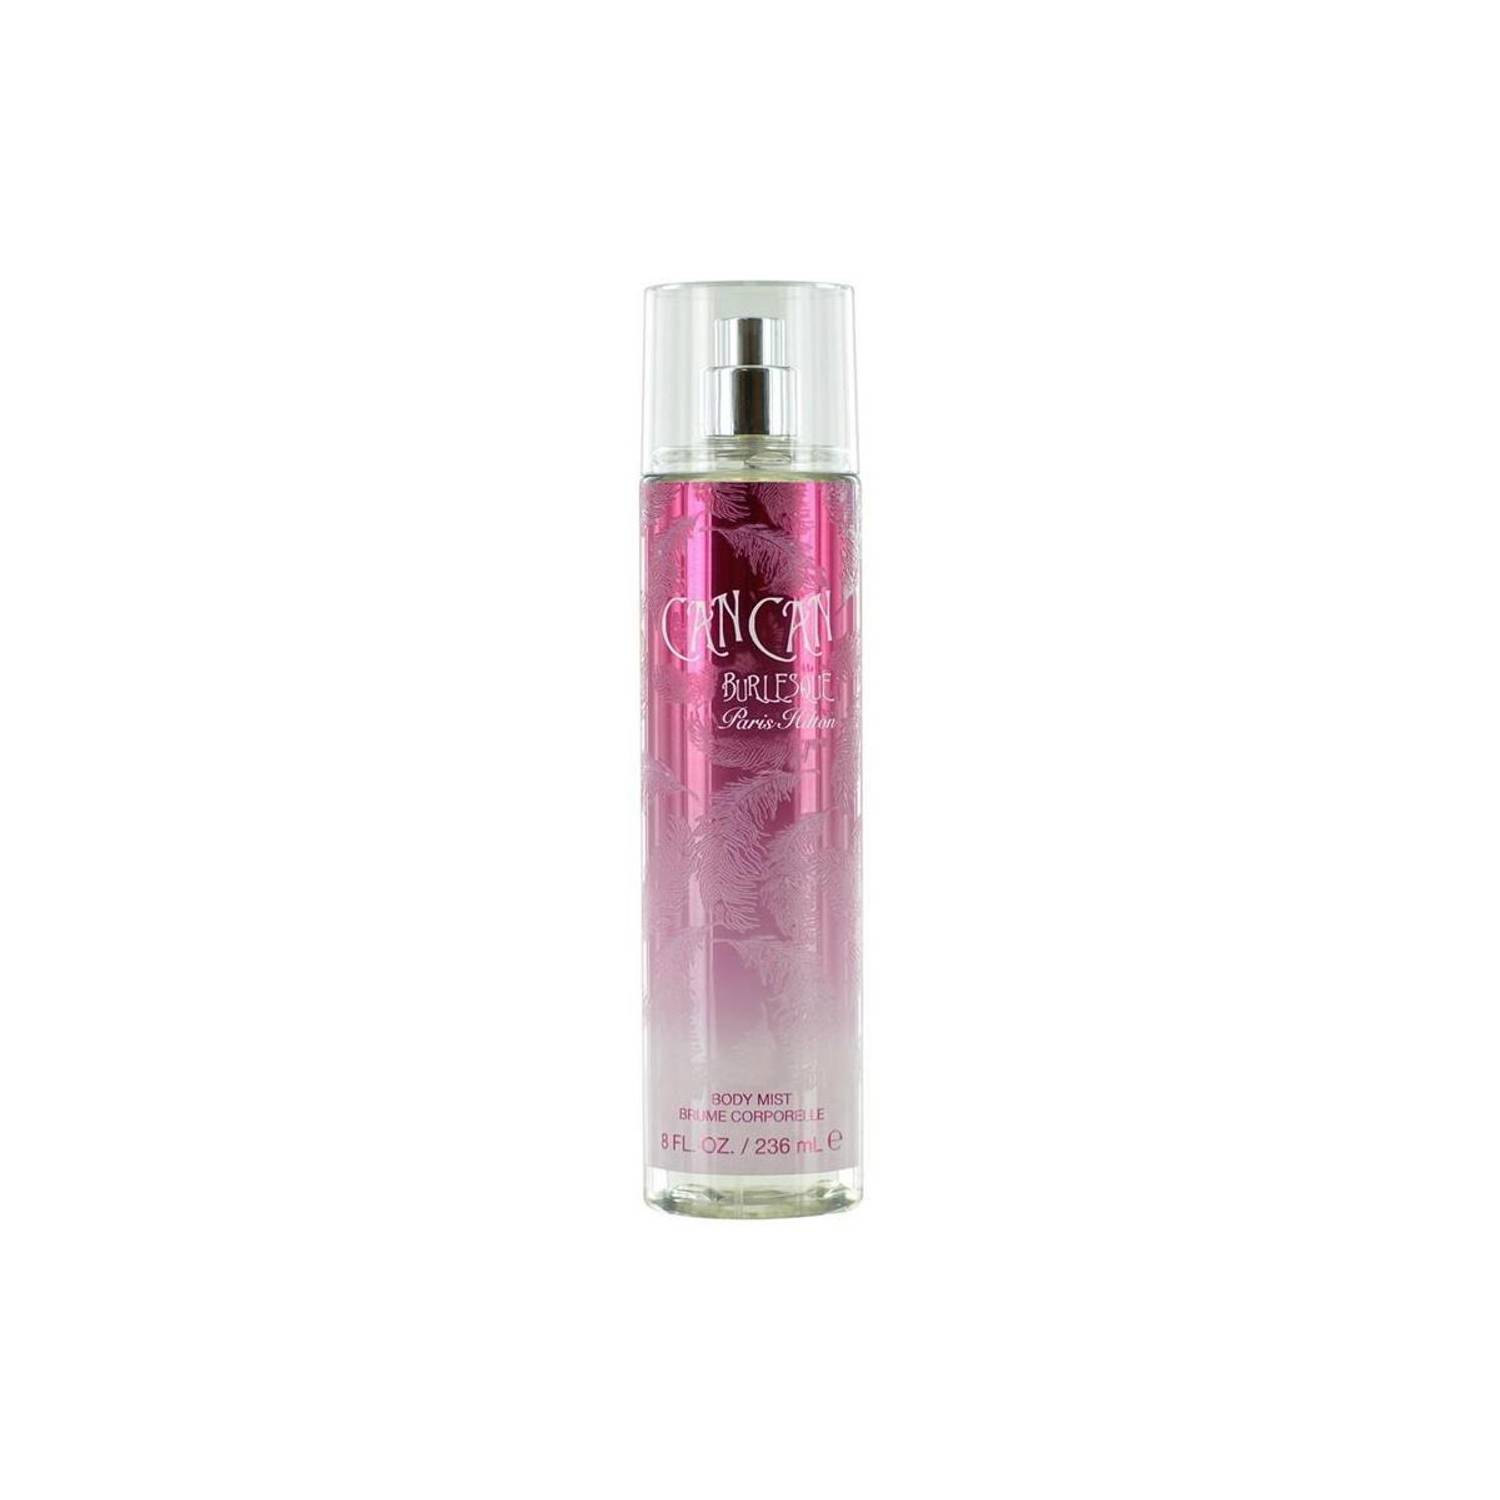 Can Can Burlesque by Paris Hilton for women Body Mist Spray 236 ml